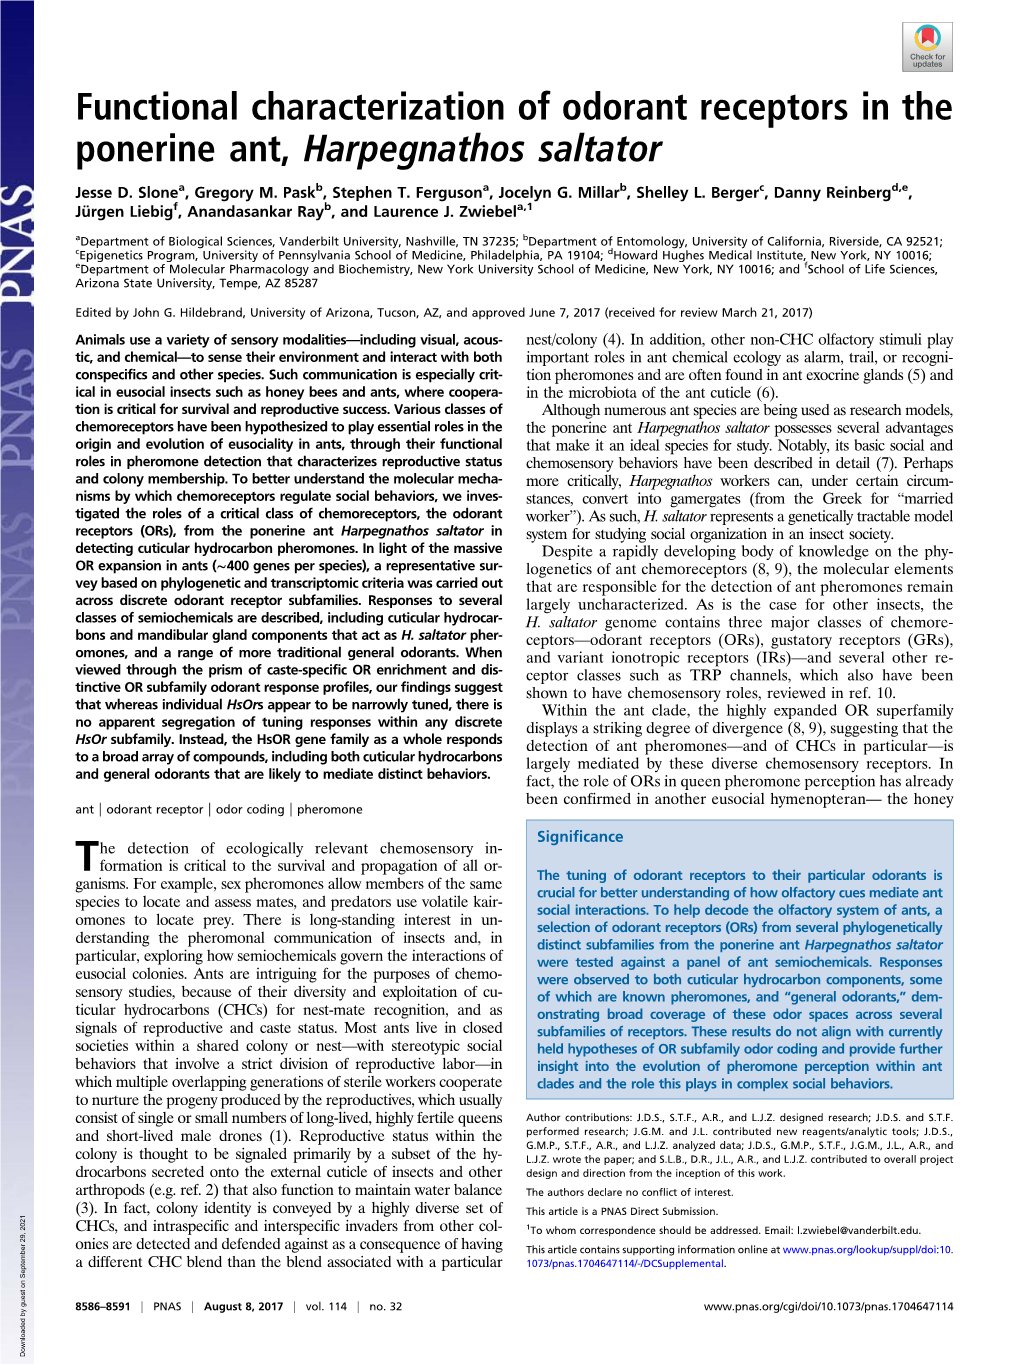 Functional Characterization of Odorant Receptors in the Ponerine Ant, Harpegnathos Saltator